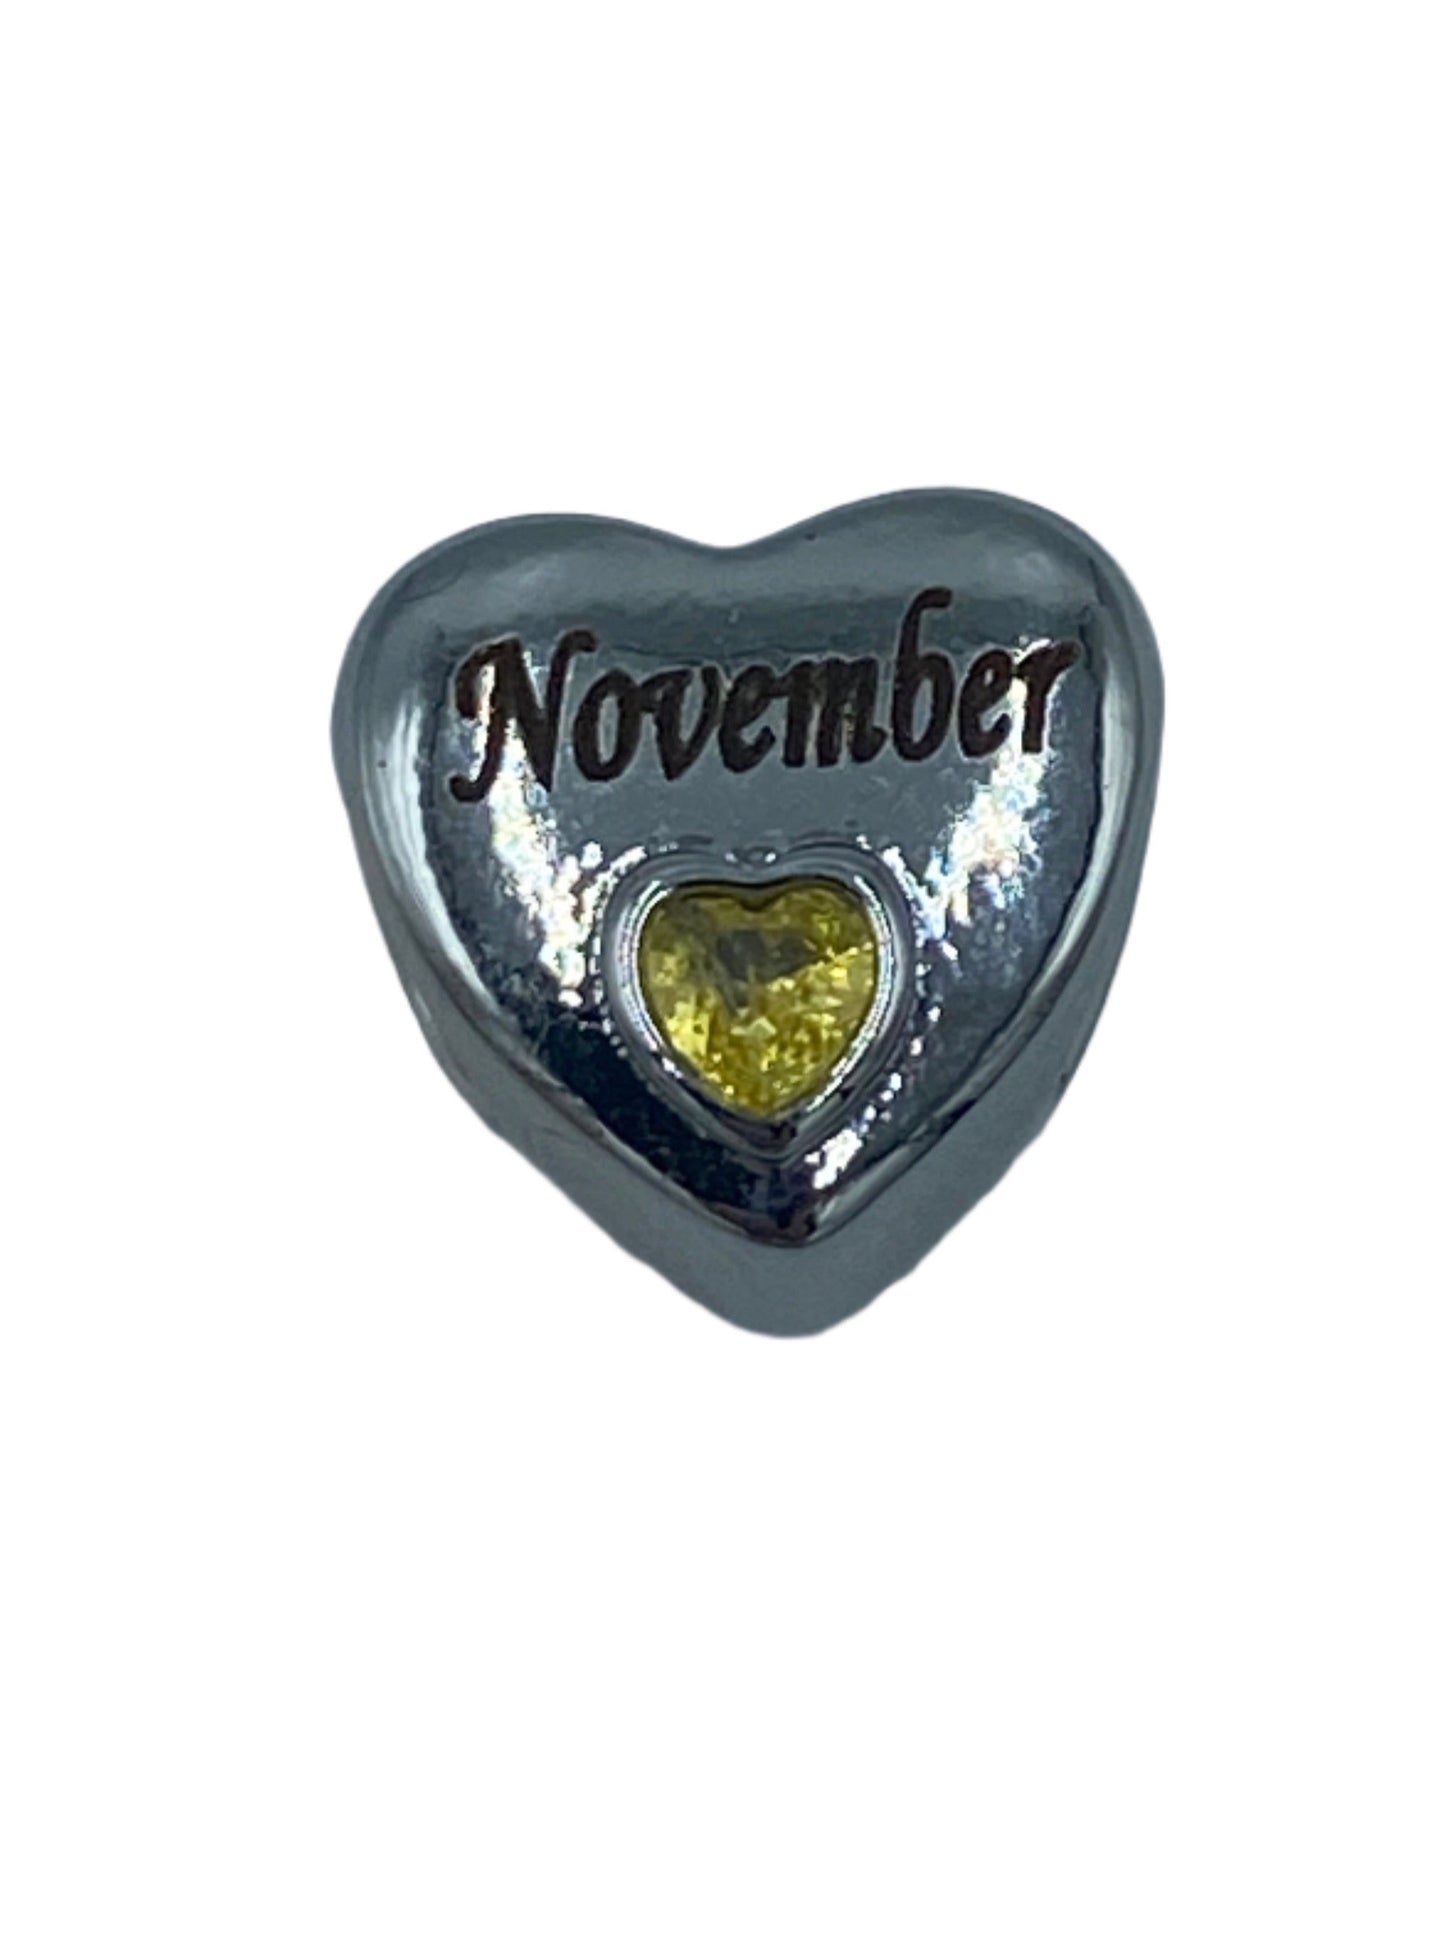 November Charm by Pandora